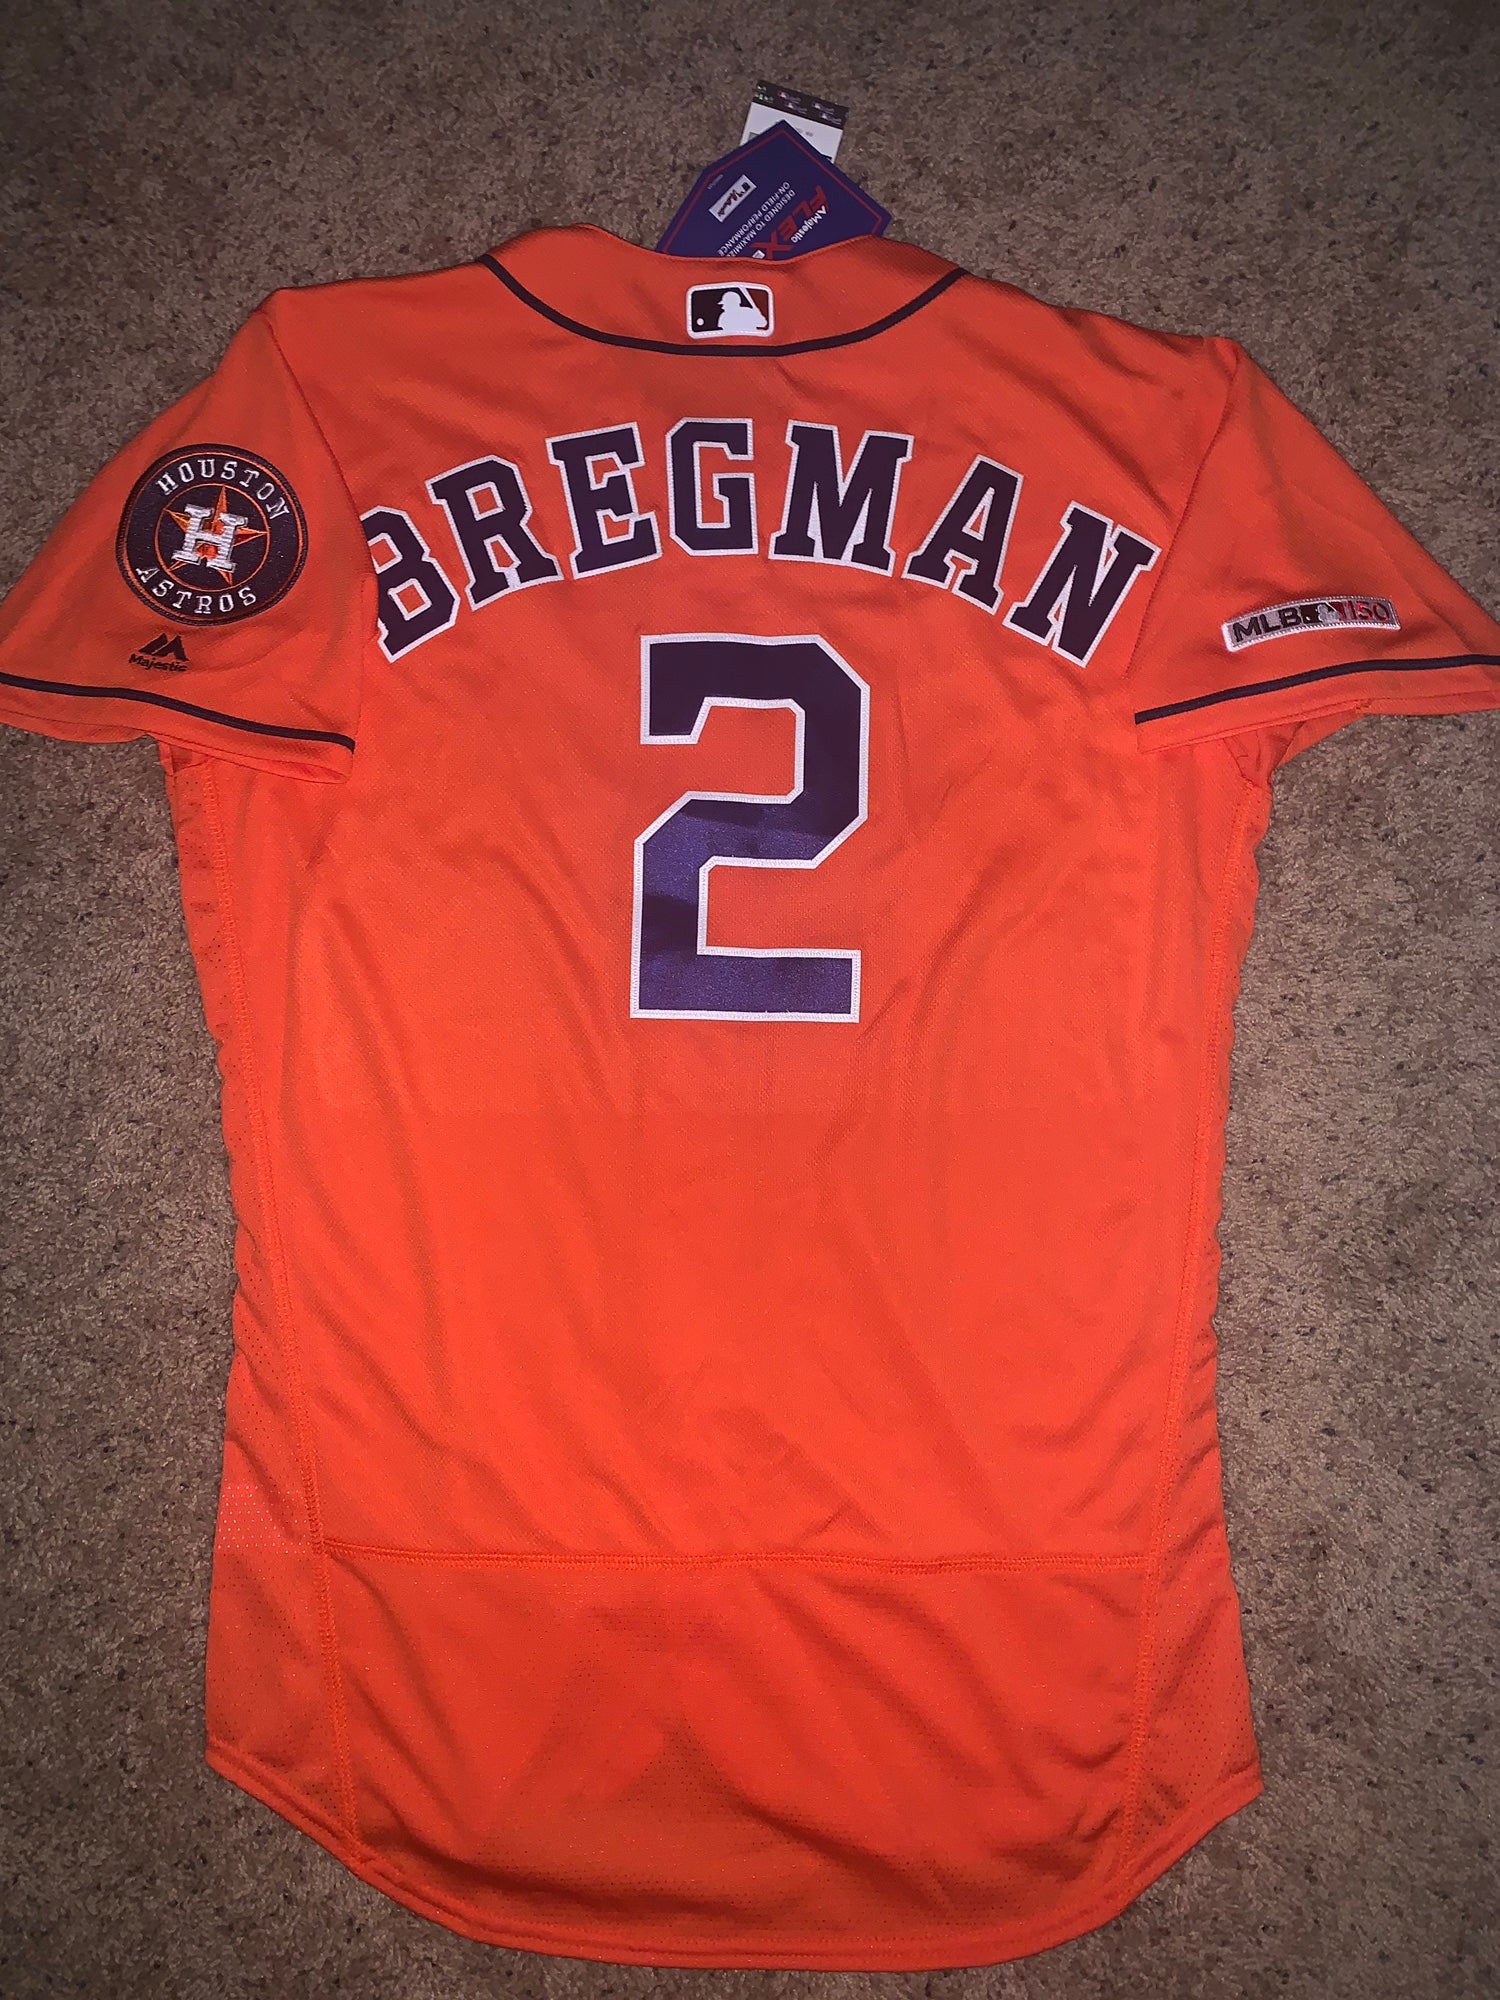 orange bregman jersey